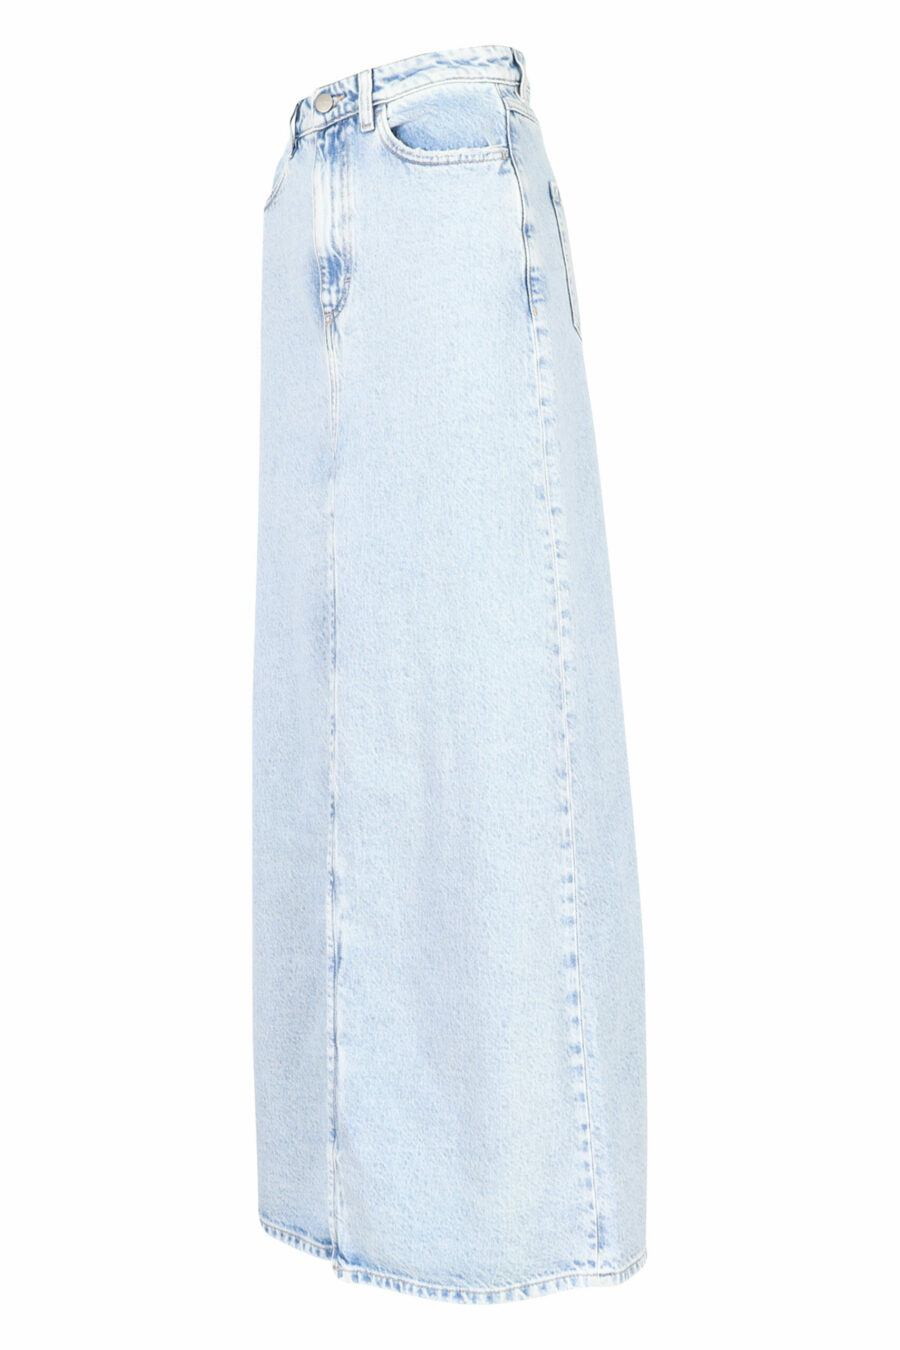 Long blue denim skirt "lara" with slit - 8052691166819 1 scaled